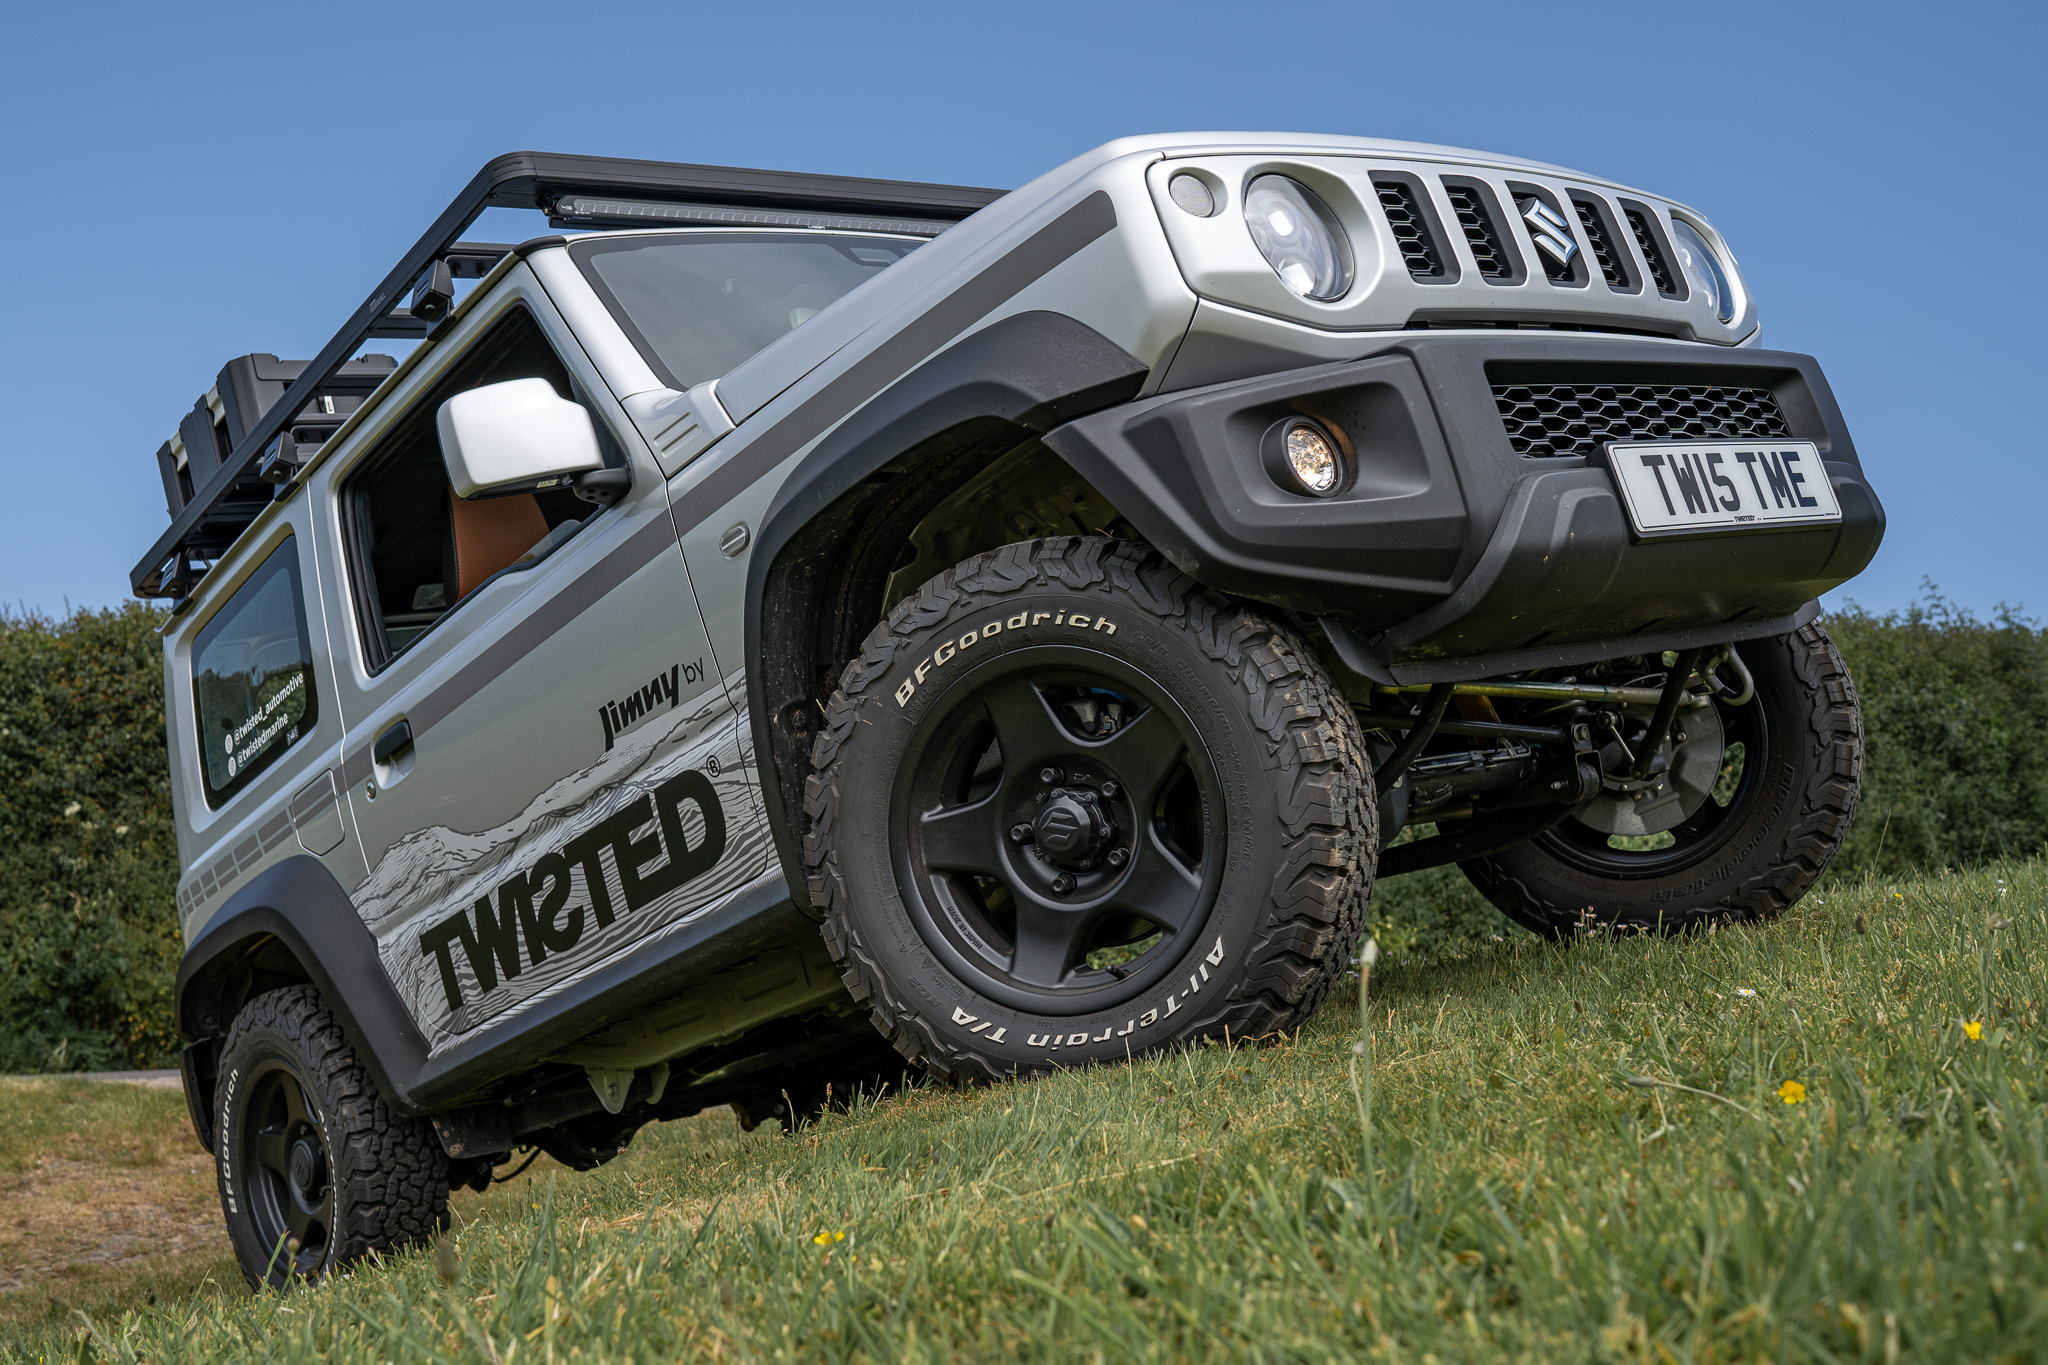 Twisted confirms new Suzuki Jimny venture - PistonHeads UK